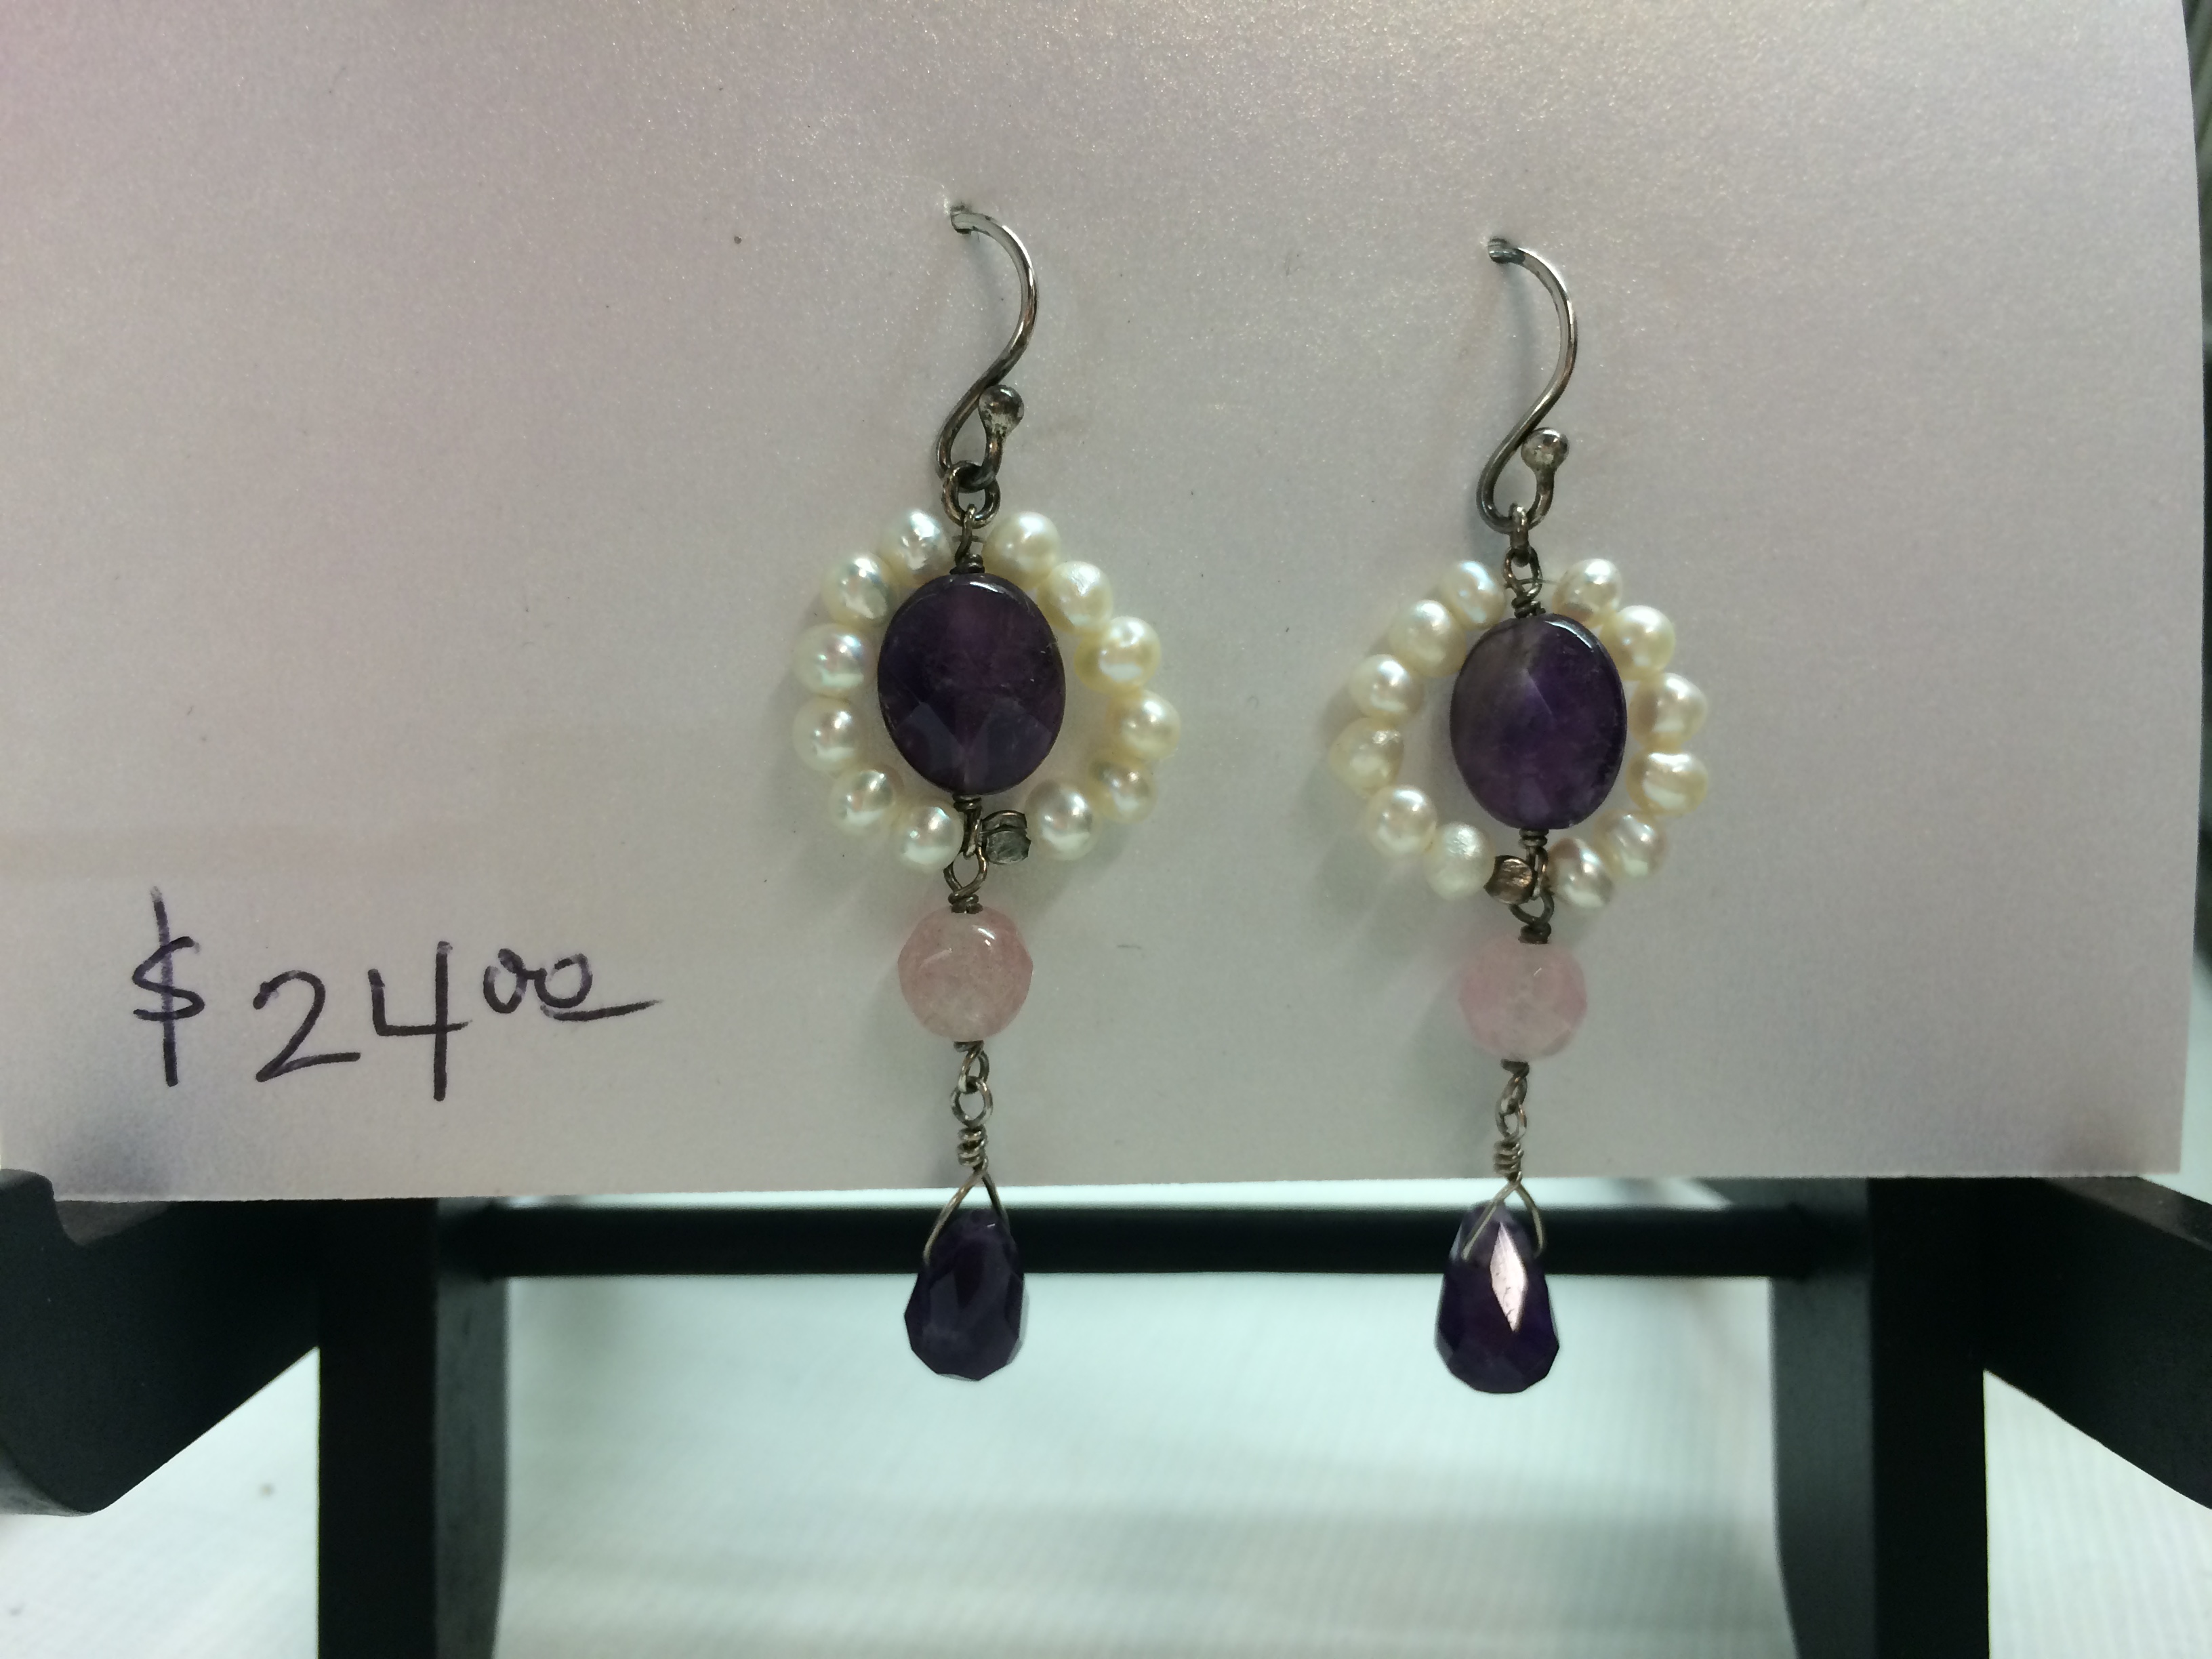 Seed pearl and amethyst dangle earrings